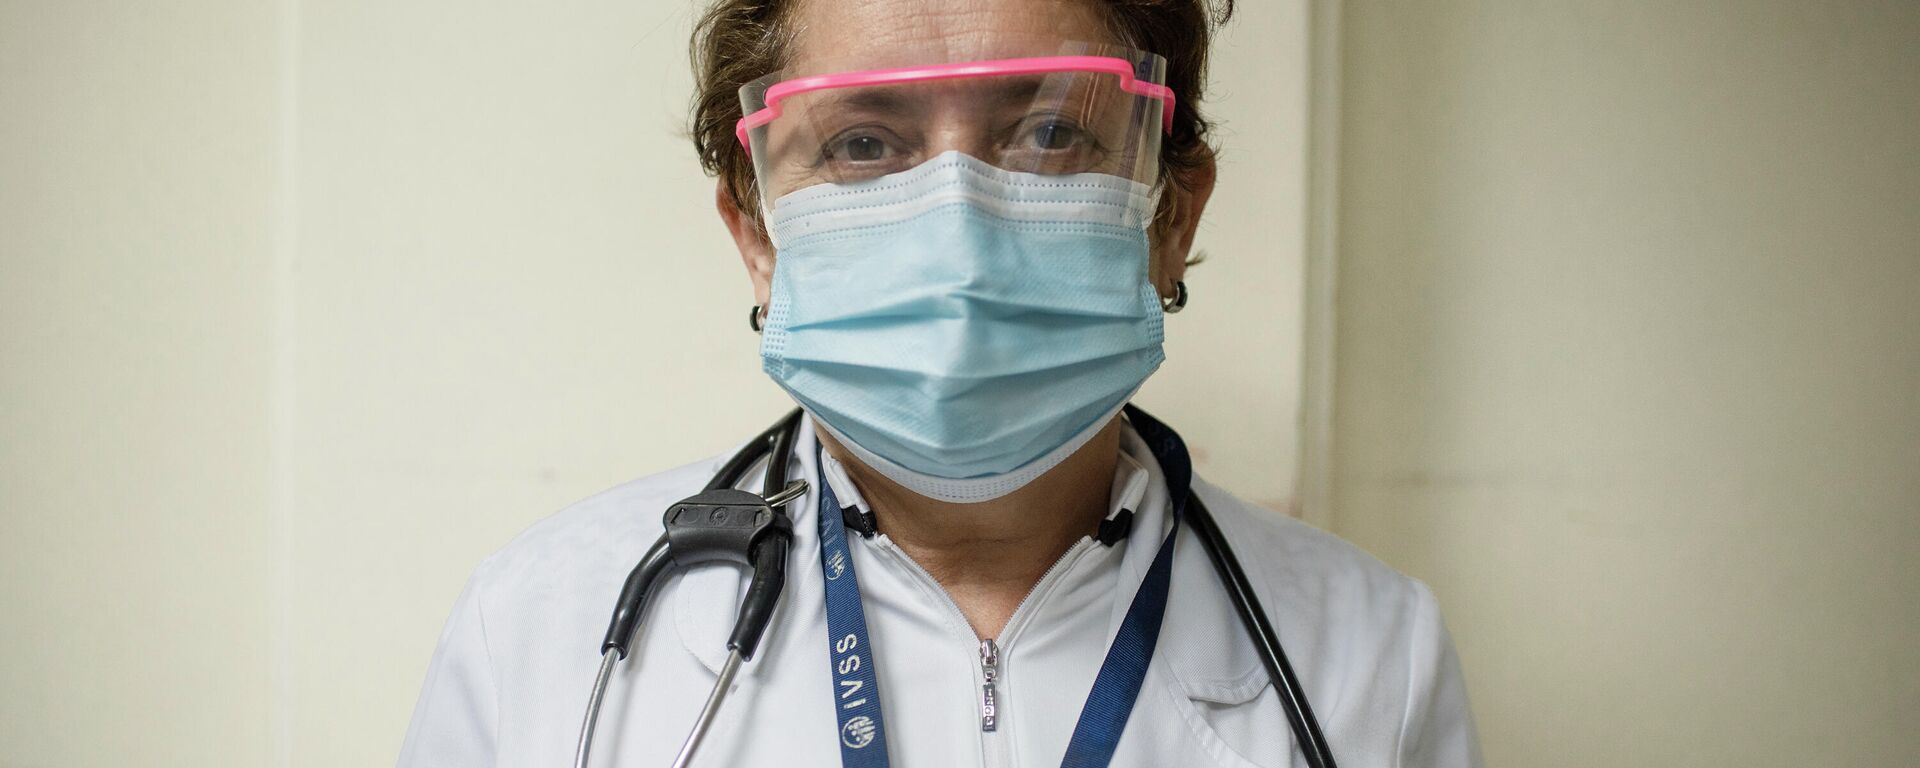 Carmen Zambrano, médica que durante un año ha estado a cargo del área COVID-19 del hospital Doctor Domingo Luciani - Sputnik Mundo, 1920, 10.03.2021